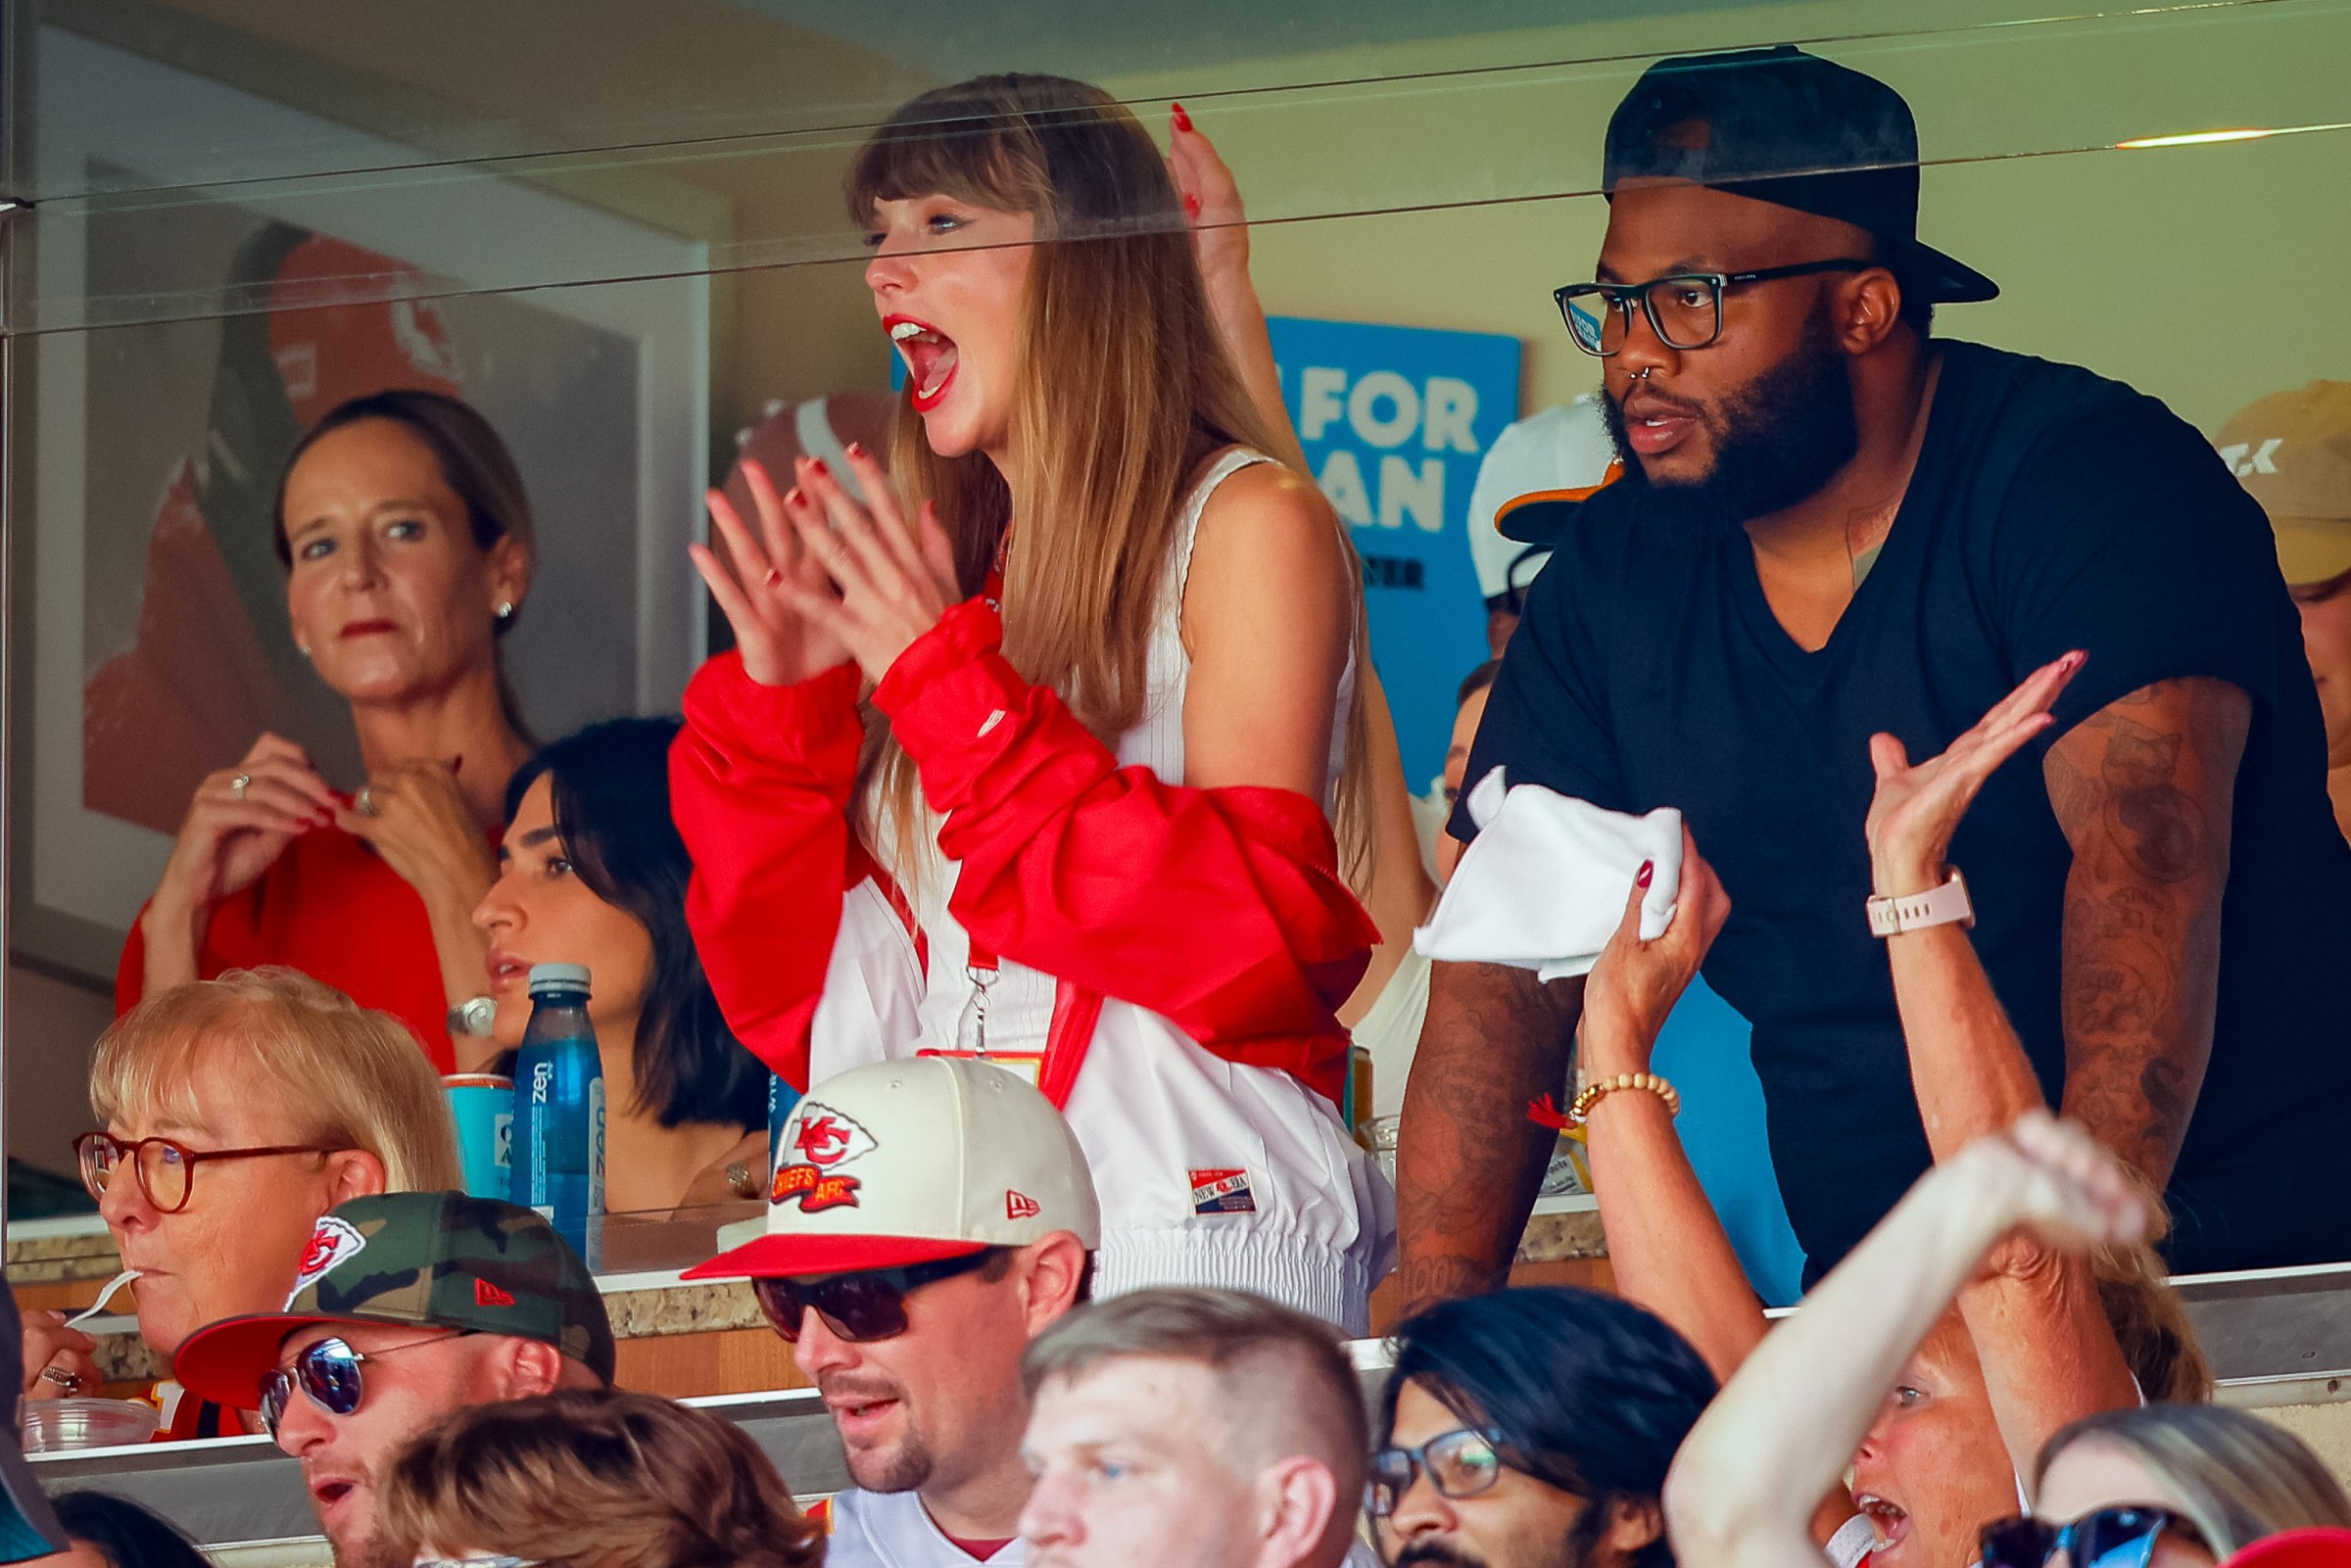 Taylor Swift cheering at the Kansas City Chiefs game